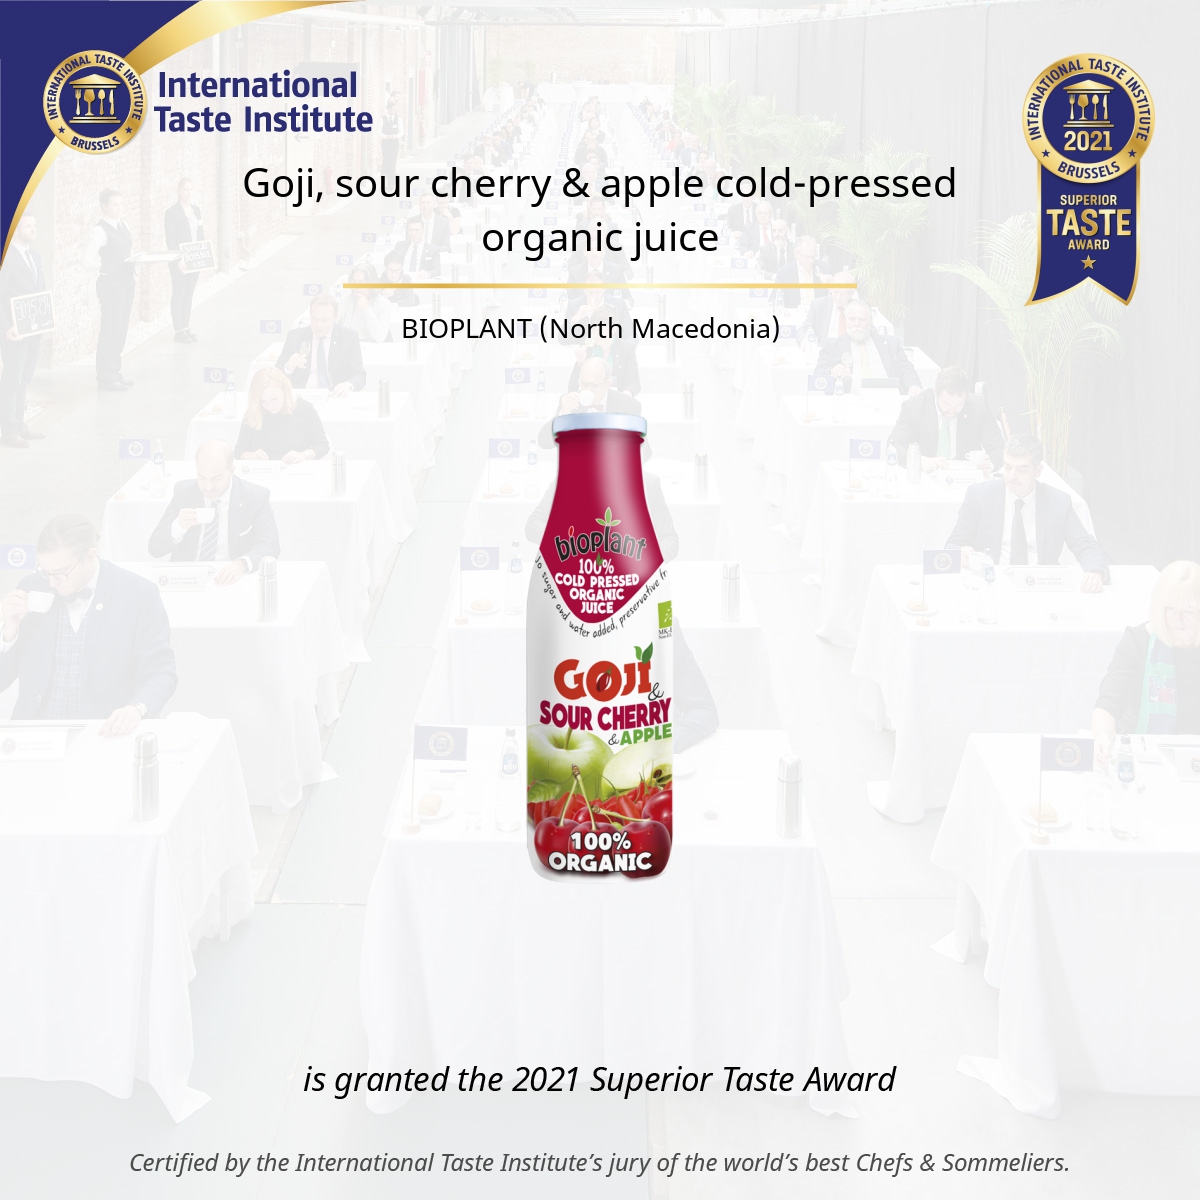 Square image of Goji, sour cherry & apple cold-pressed organic juice